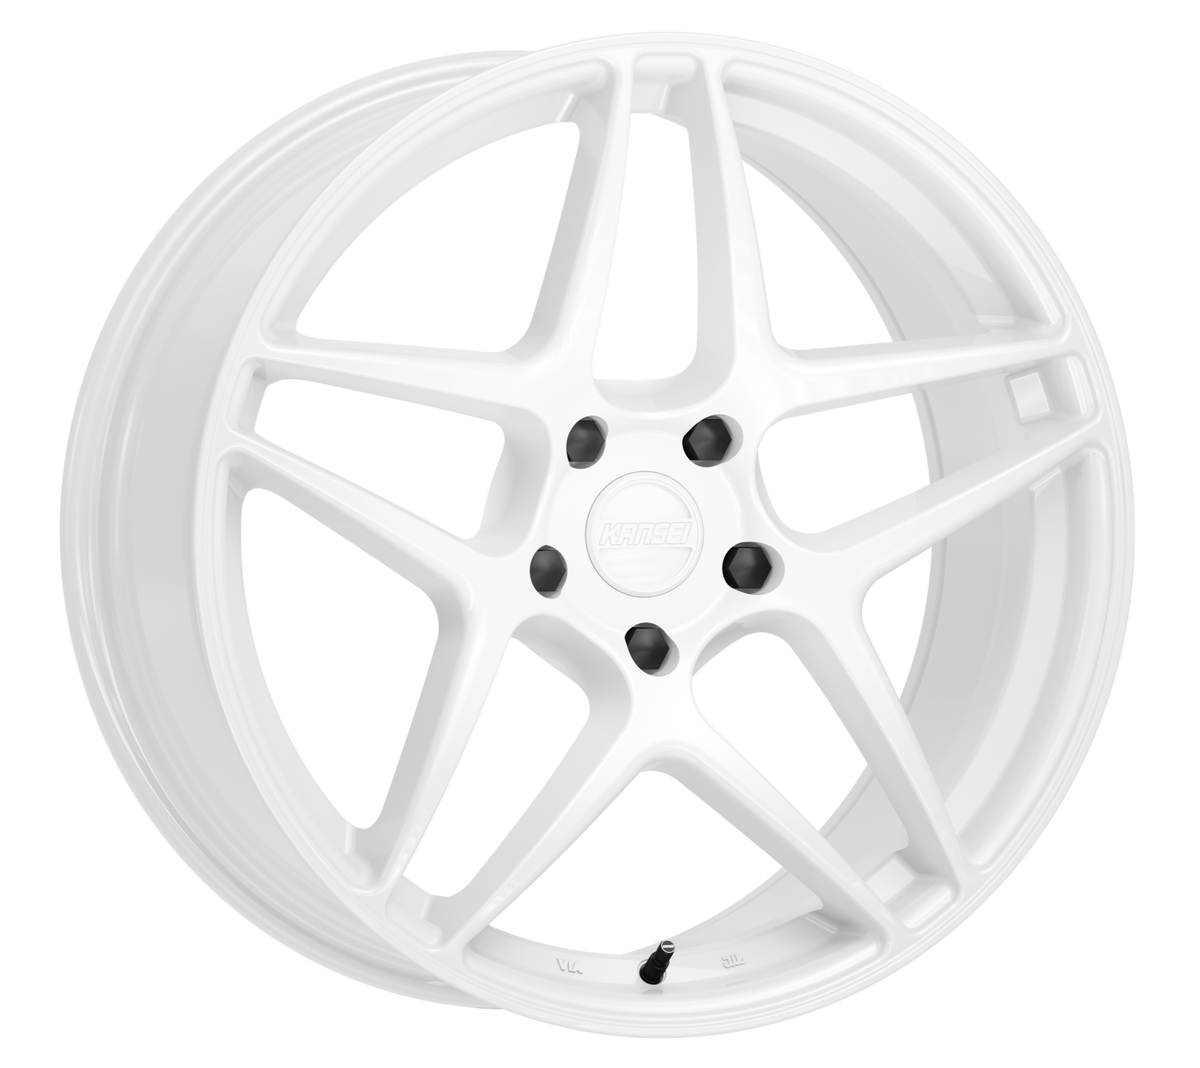 K15W ASTRO Wheel, Size: 19" x 10.50", Bolt Pattern: 5 x 120 mm, Backspace: 6.22" [Finish: Gloss White]